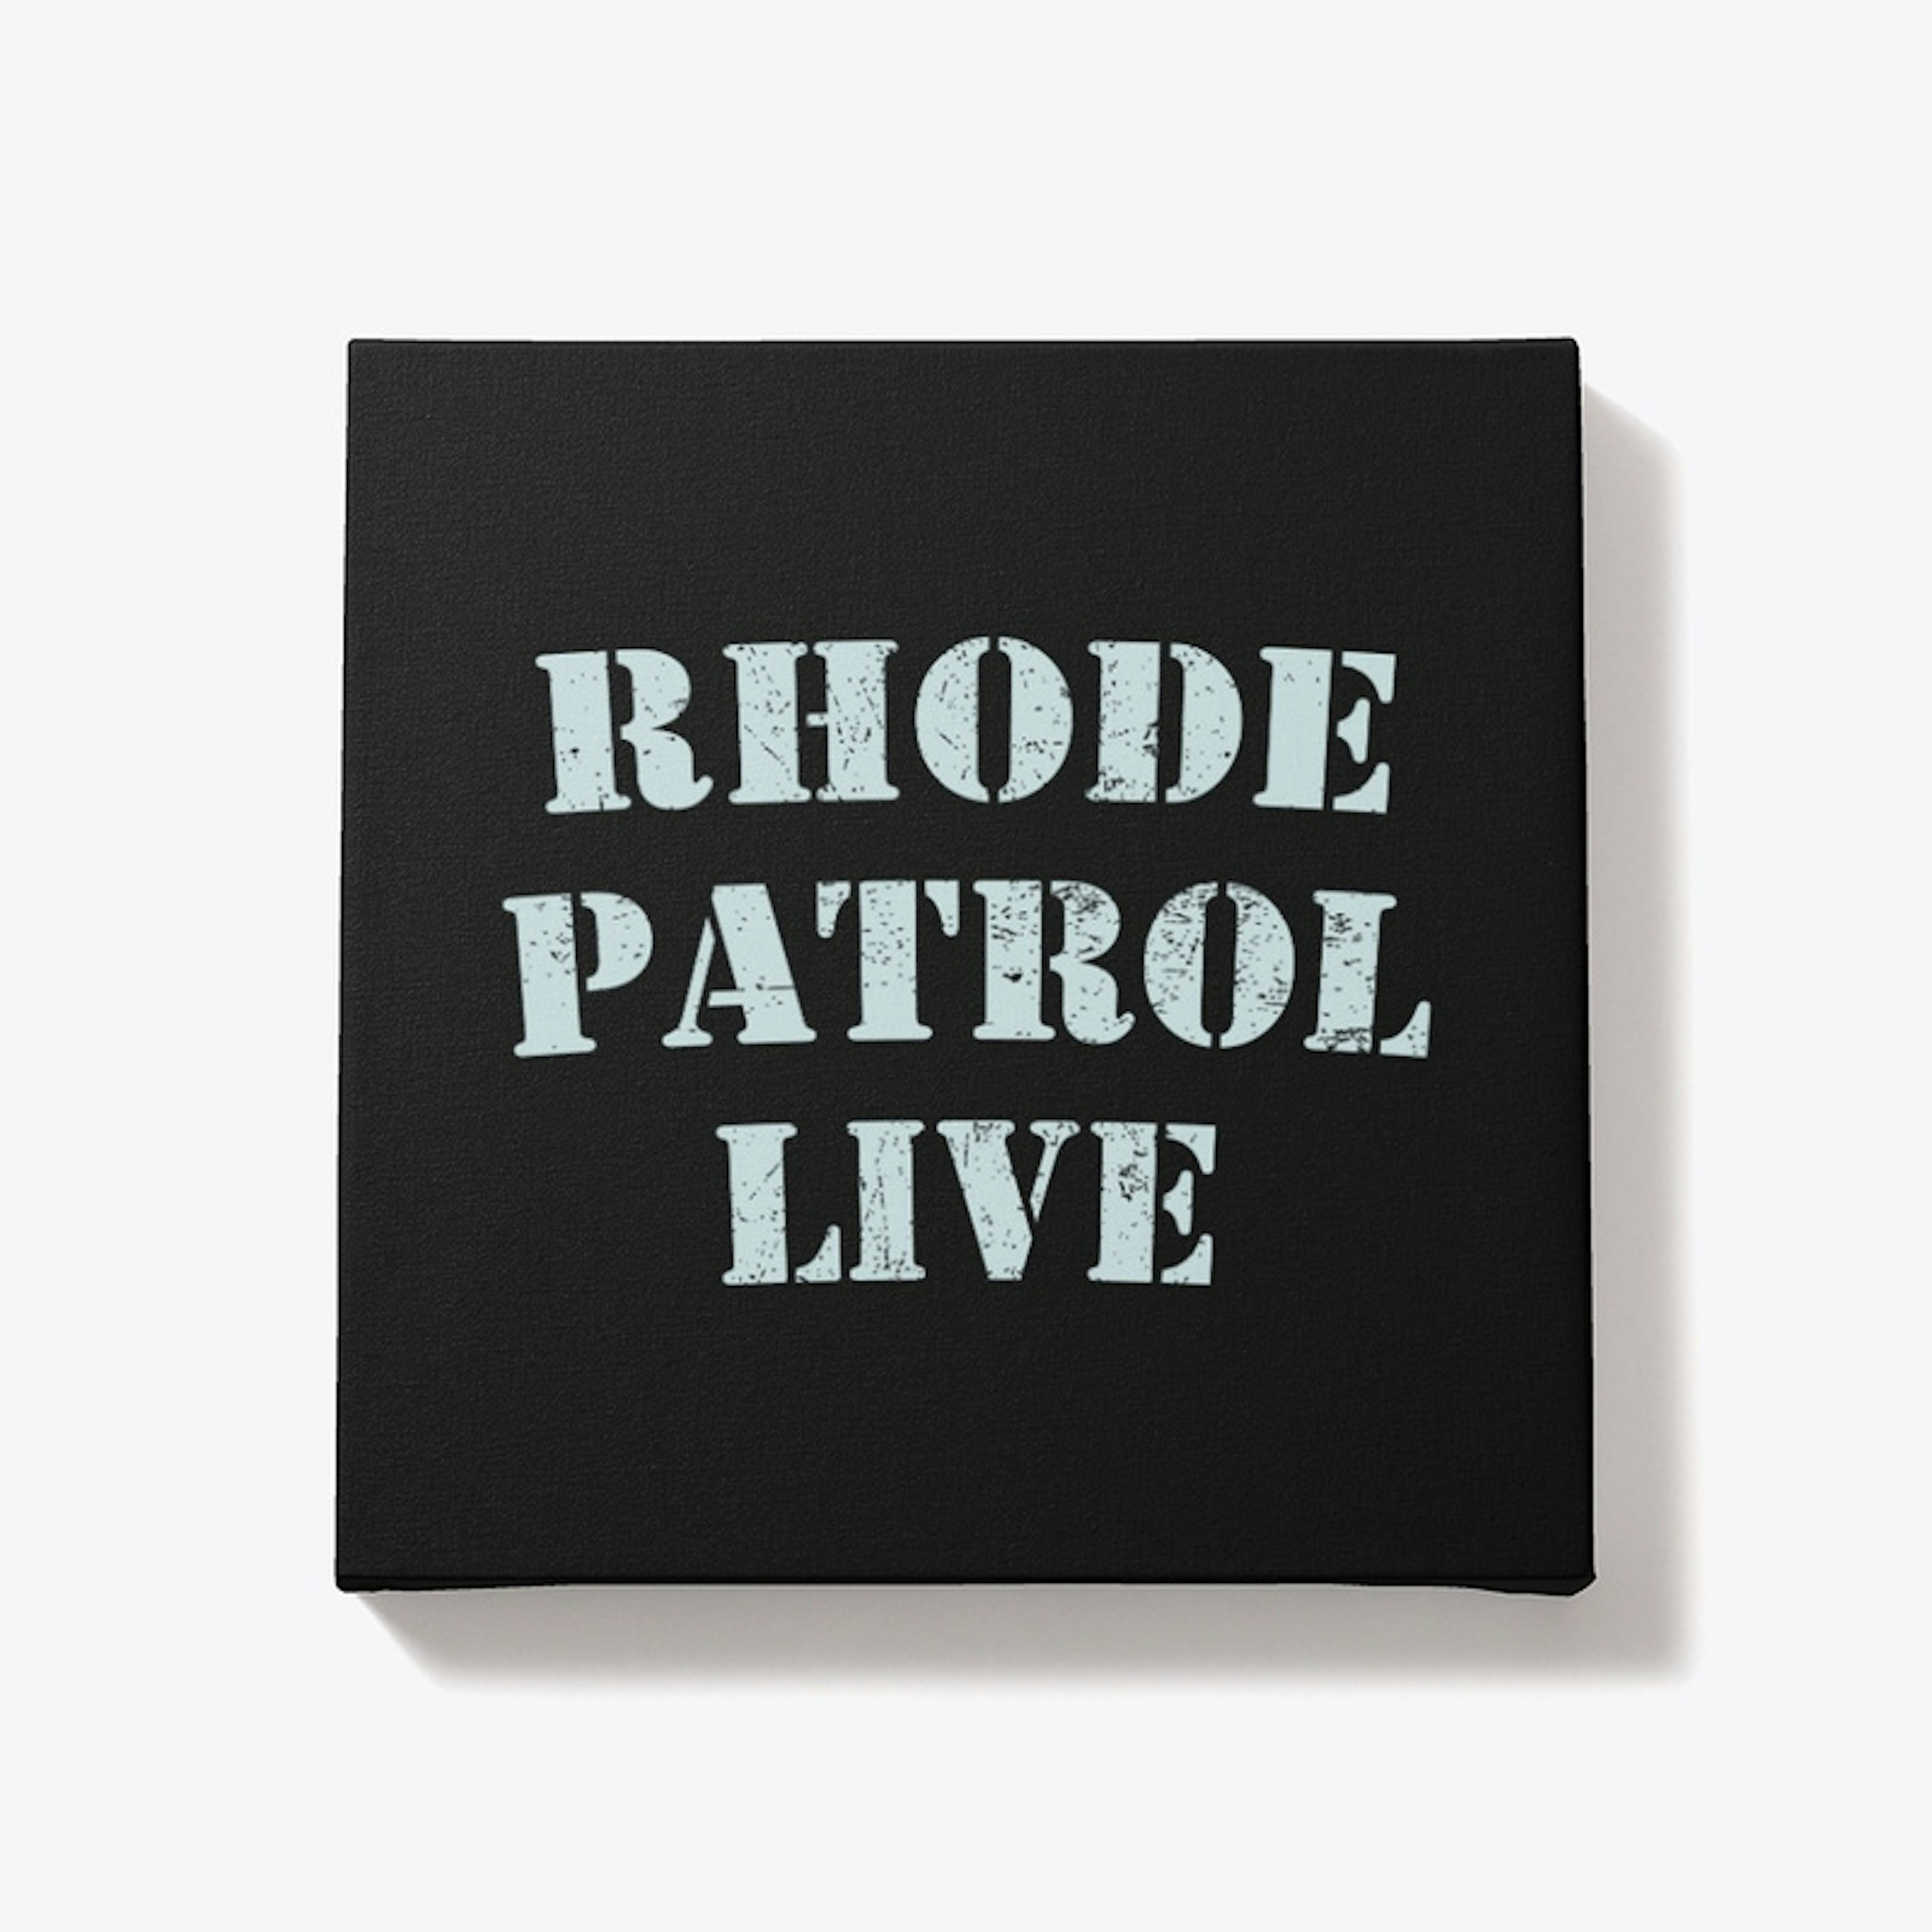 Rhode Patrol Live